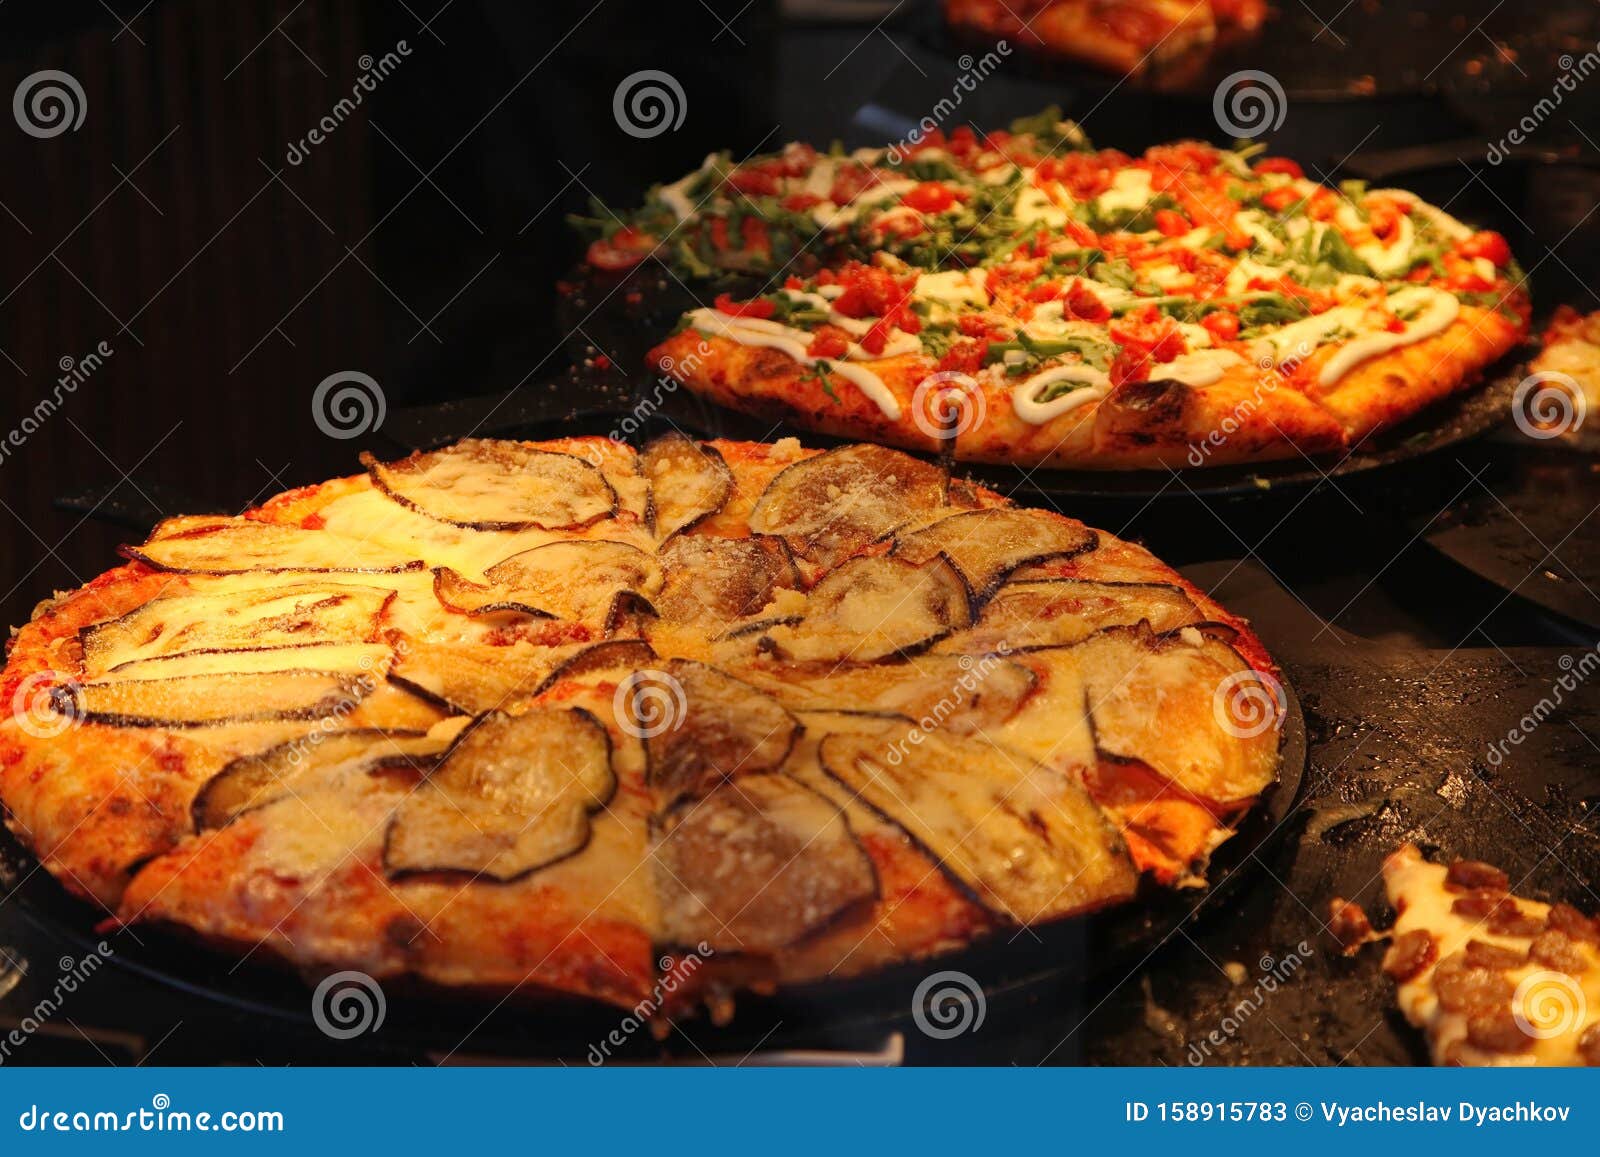 Ruddy Dough Italian Pizza In The Restaurants Kitchen Oven Stock Image Image Of Bread